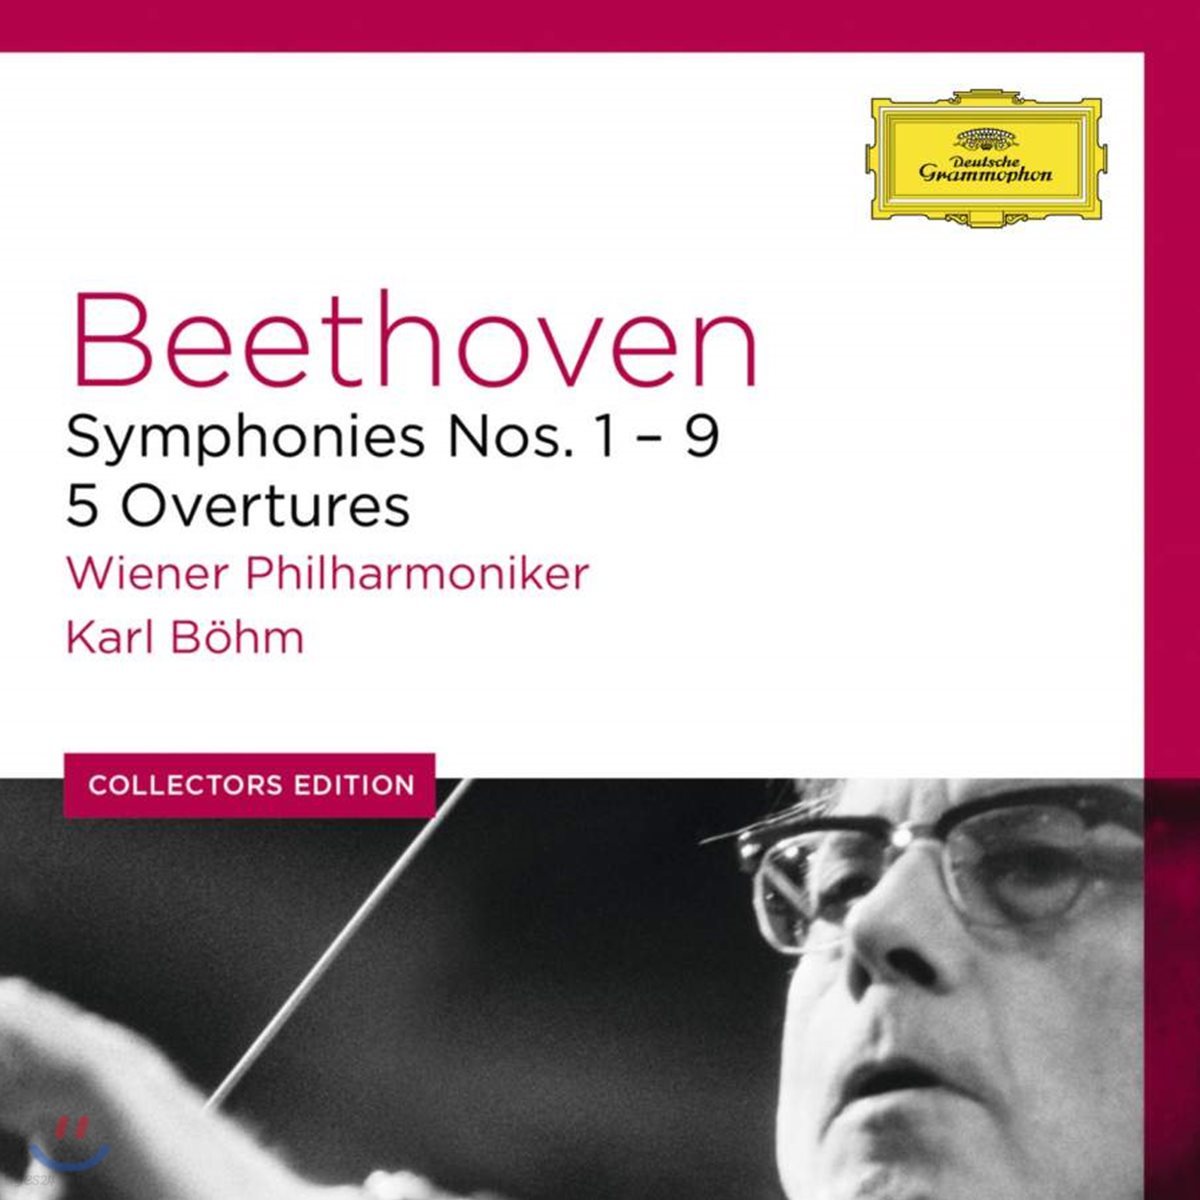 Karl Bohm 베토벤: 교향곡 전곡, 서곡집 (Beethoven: Symphonies, Overtures)